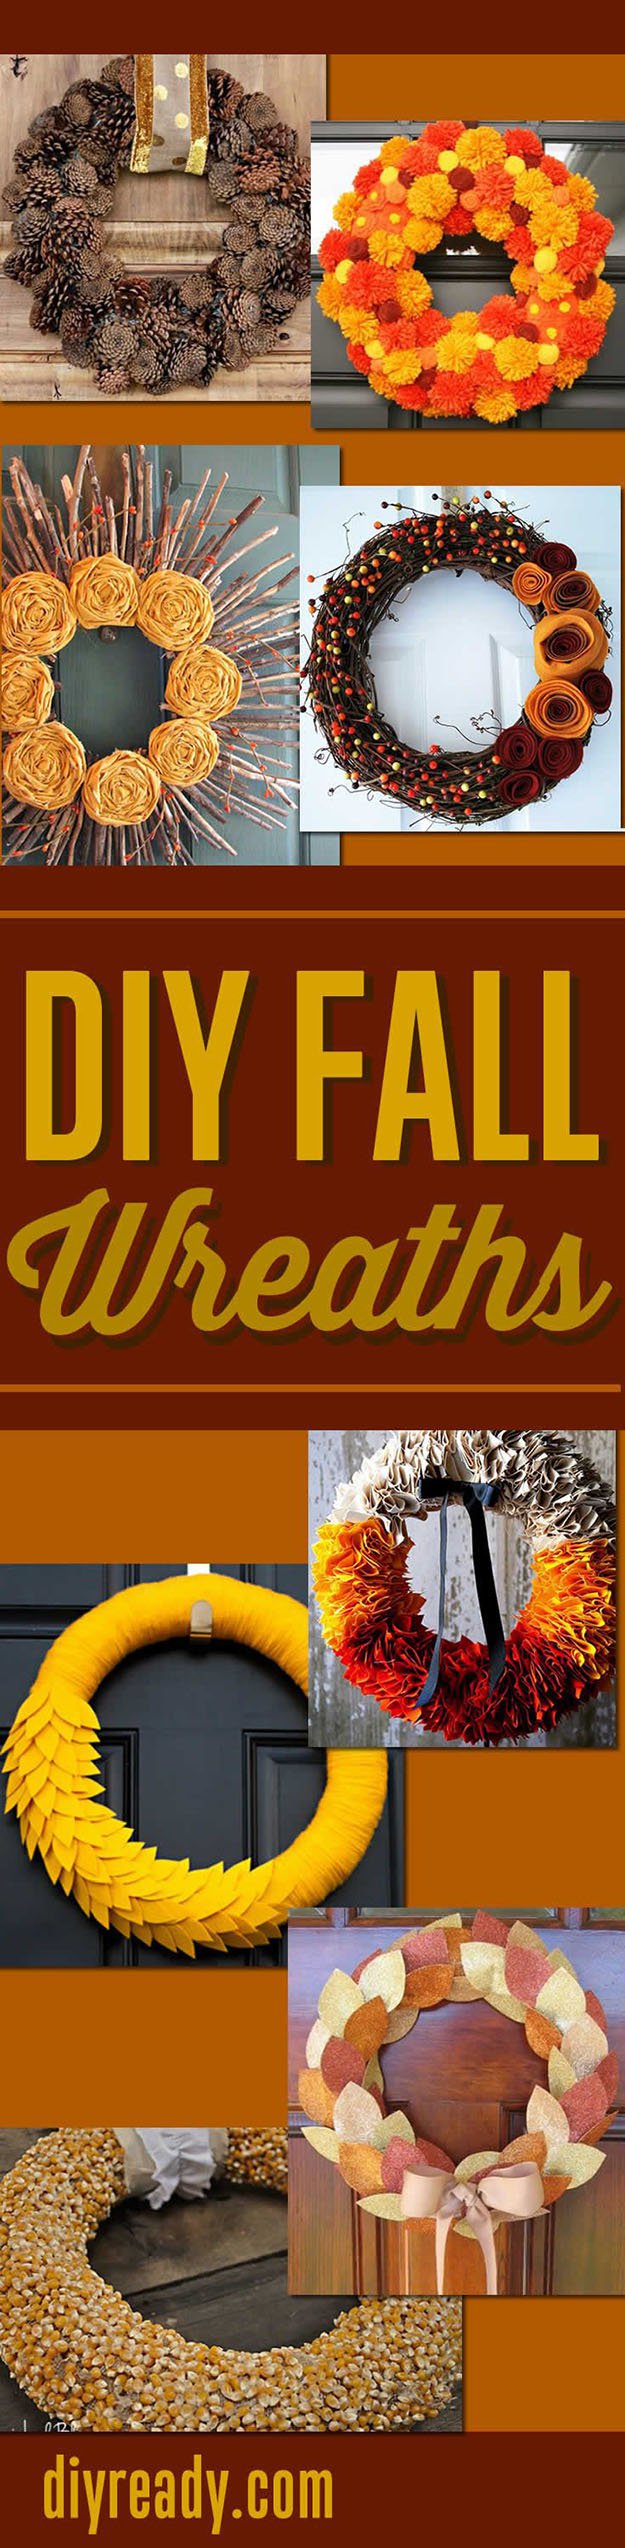 Fun Fall Wreath Ideas | How To Make Front Door Wreaths | https://diyprojects.com/fall-wreath-ideas/